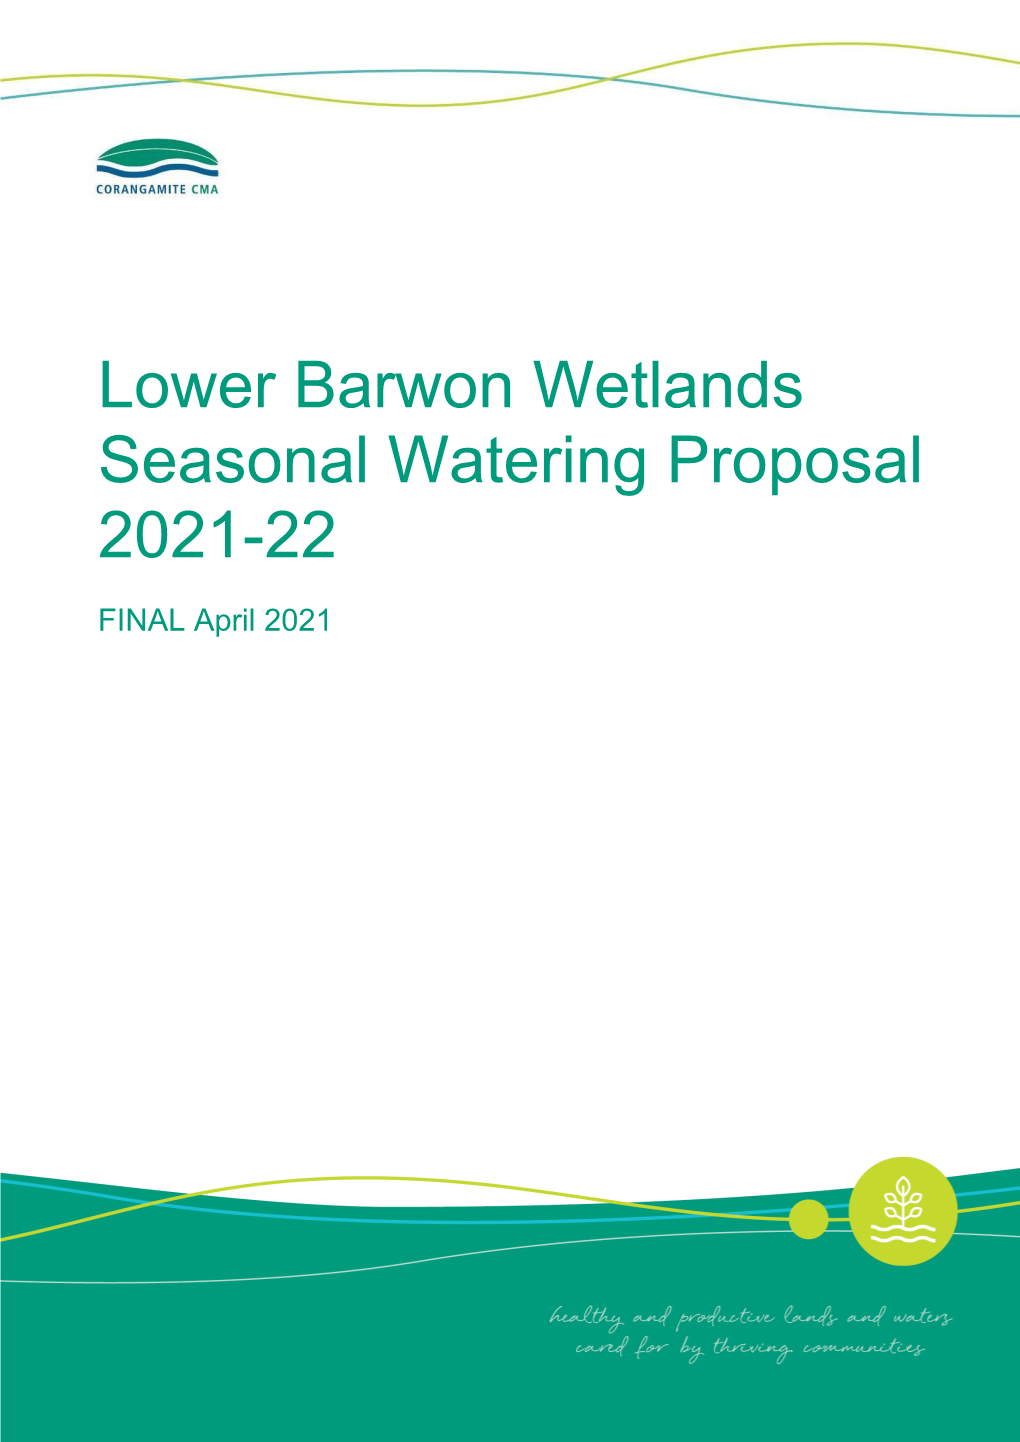 Lower Barwon Wetlands Seasonal Watering Proposal 2021-22